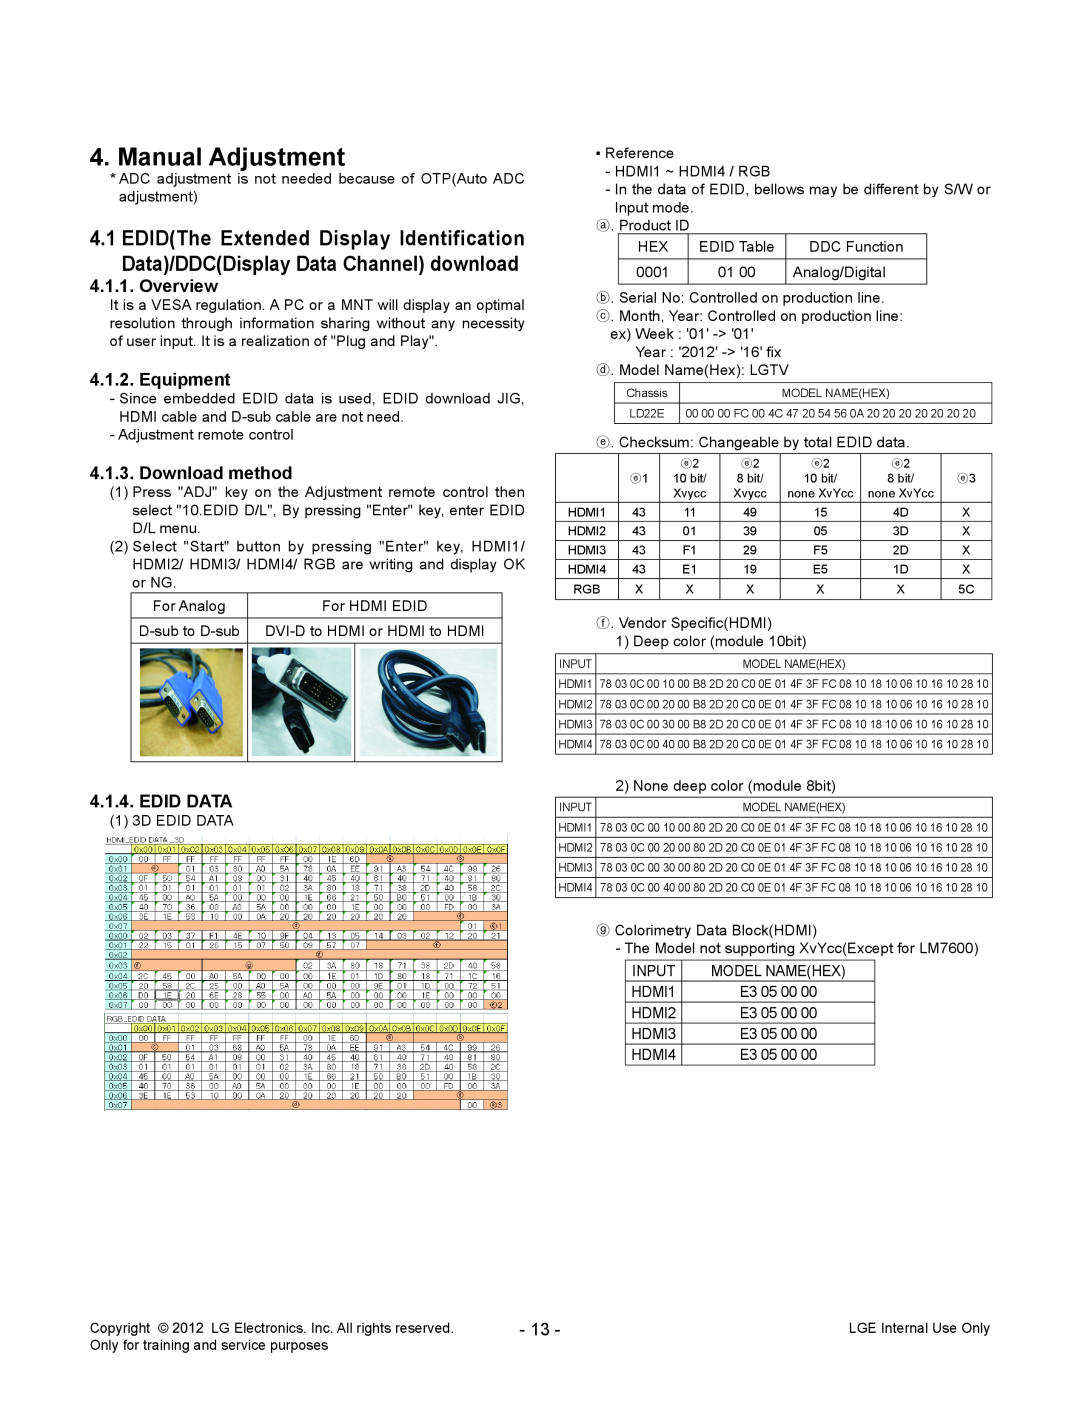 LG Electronics 32LM640S/640T-ZA service manual Manual Adjustment, Overview, Equipment, Download method, Edid Data 